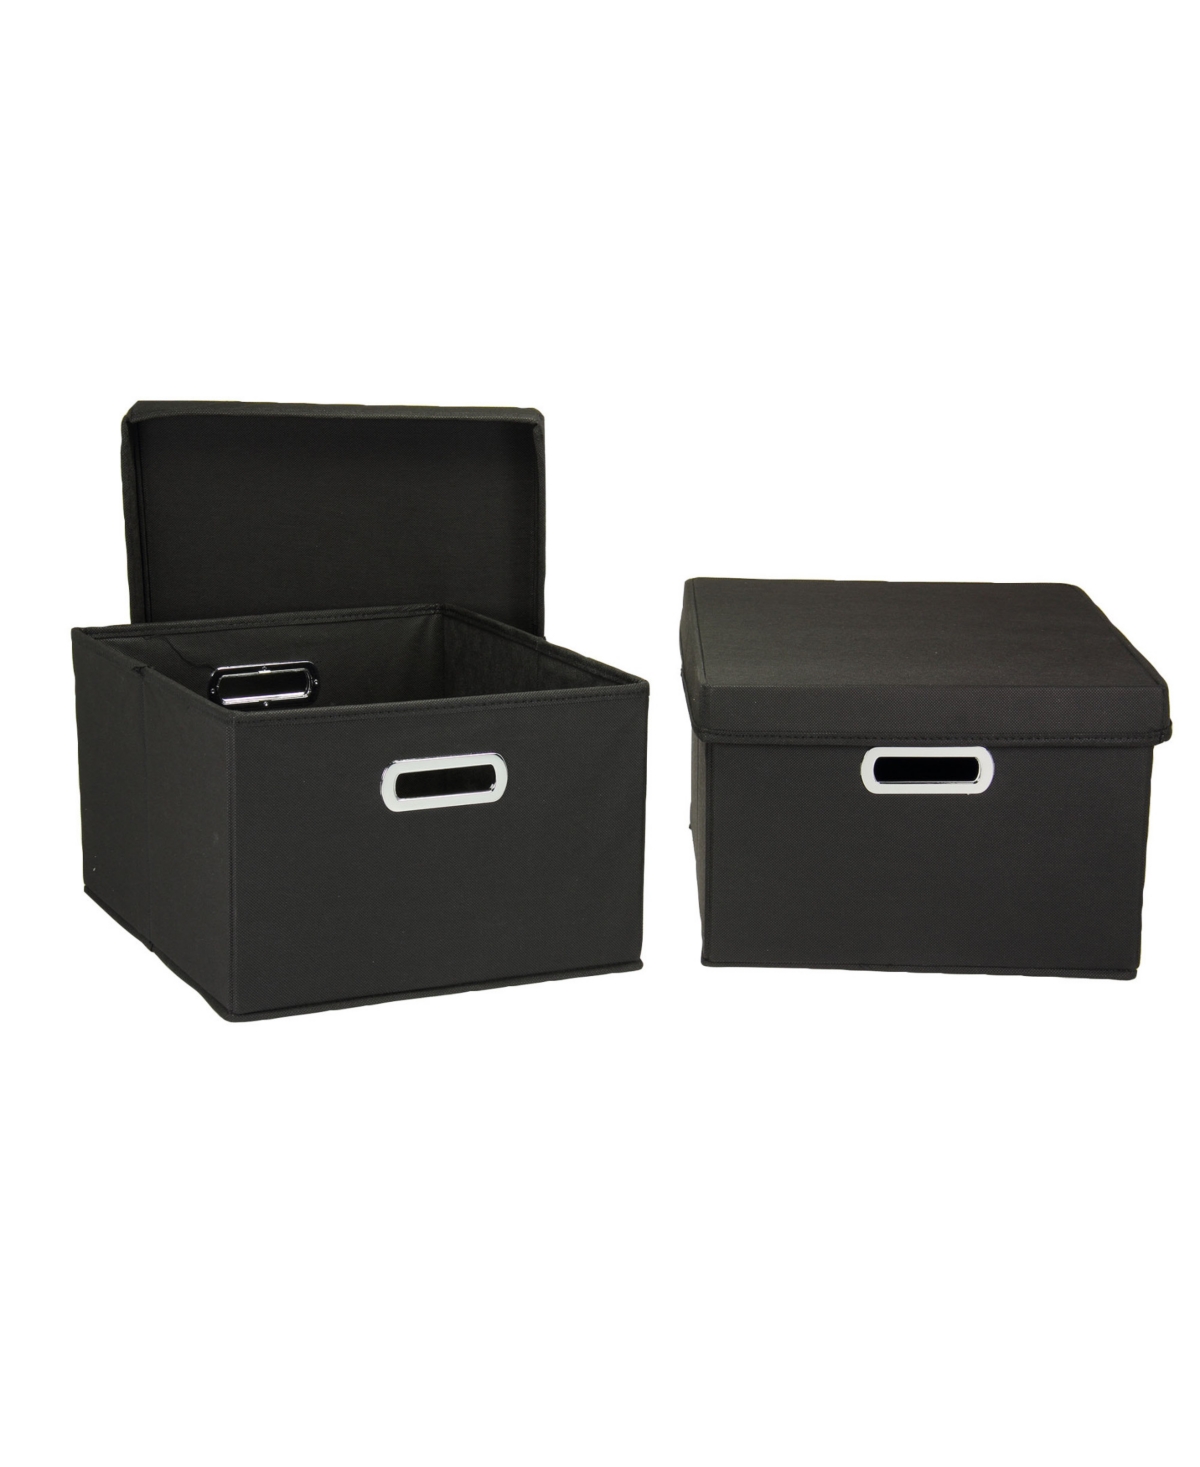 Boxes with Lids, Kd, Set of 2 - Matte Black